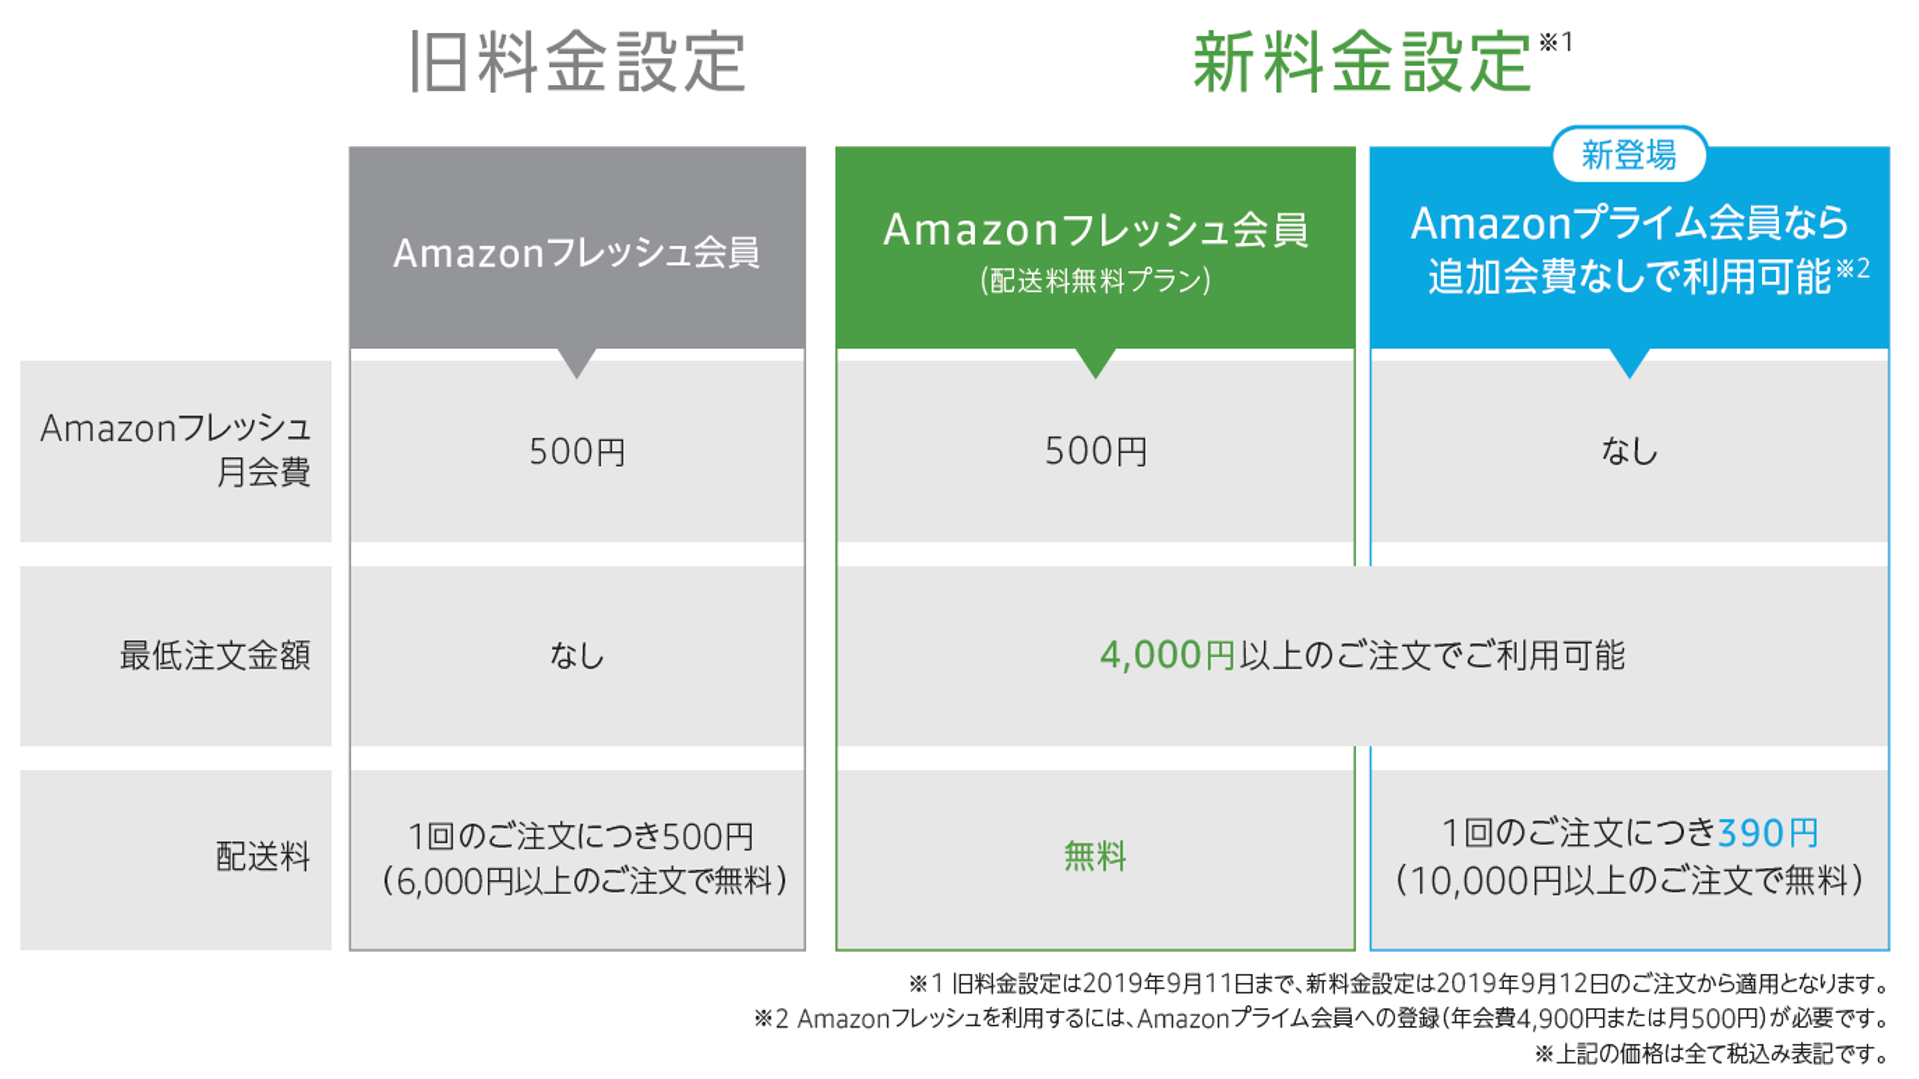 Amazonフレッシュ 利便性向上のため新たな料金プランを導入 アマゾンジャパン合同会社のプレスリリース